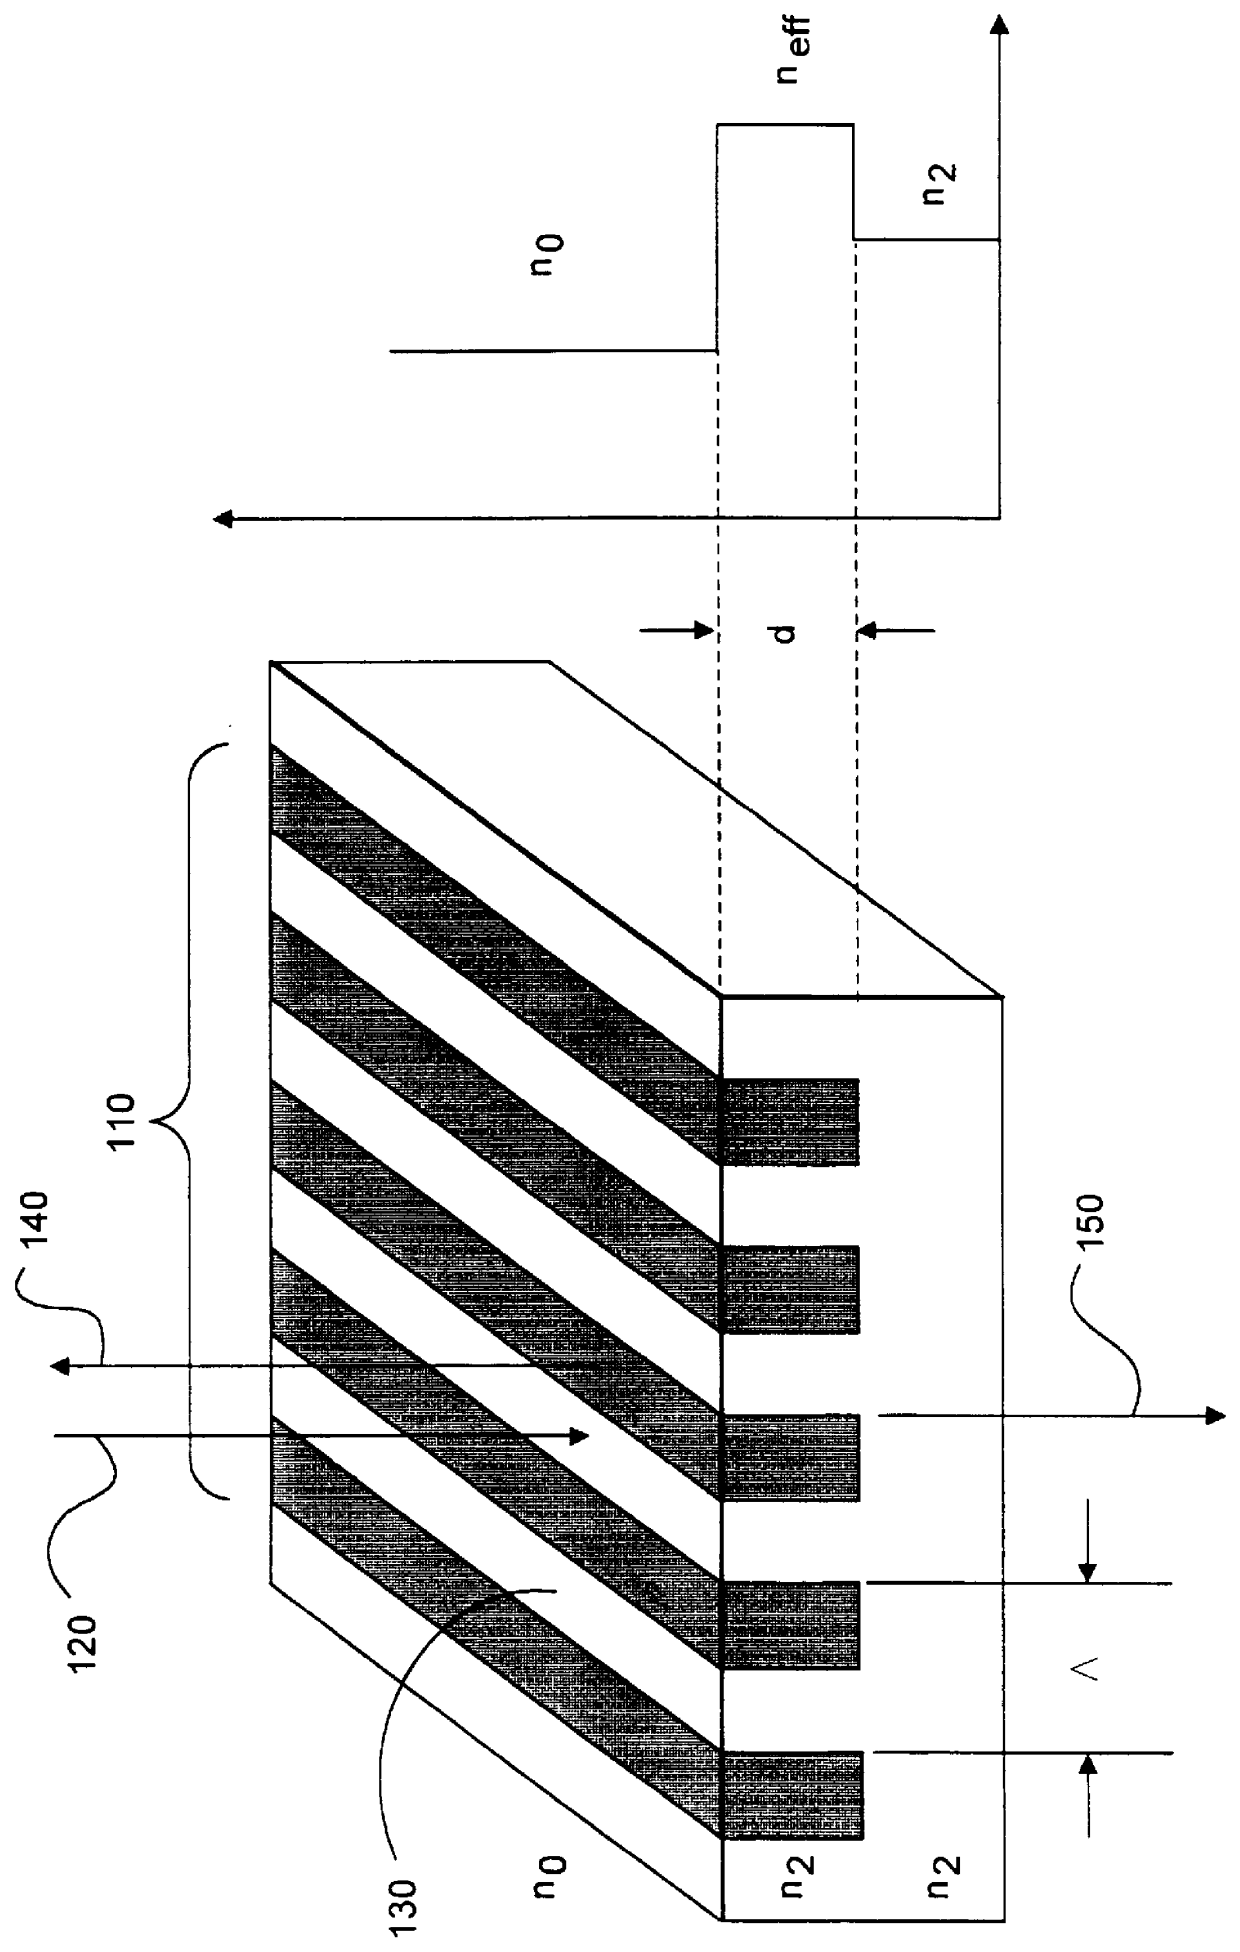 Integrated narrowband optical filter based on embedded subwavelength resonant grating structures